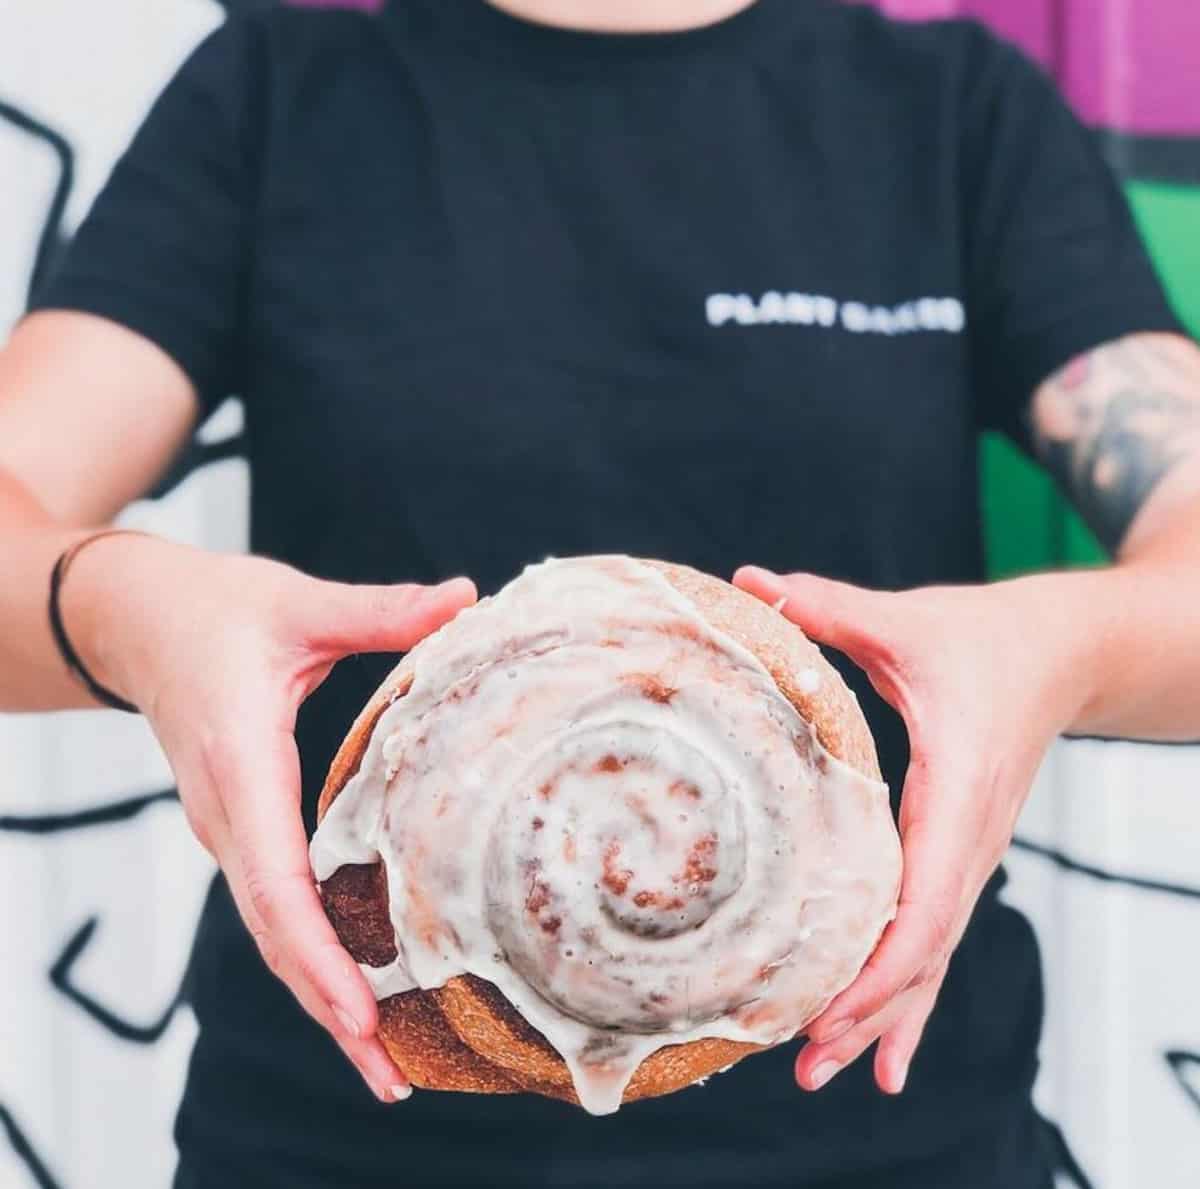 A vegan Texas-sized cinnamon roll from Skull & Cakebones plant-based bakery.